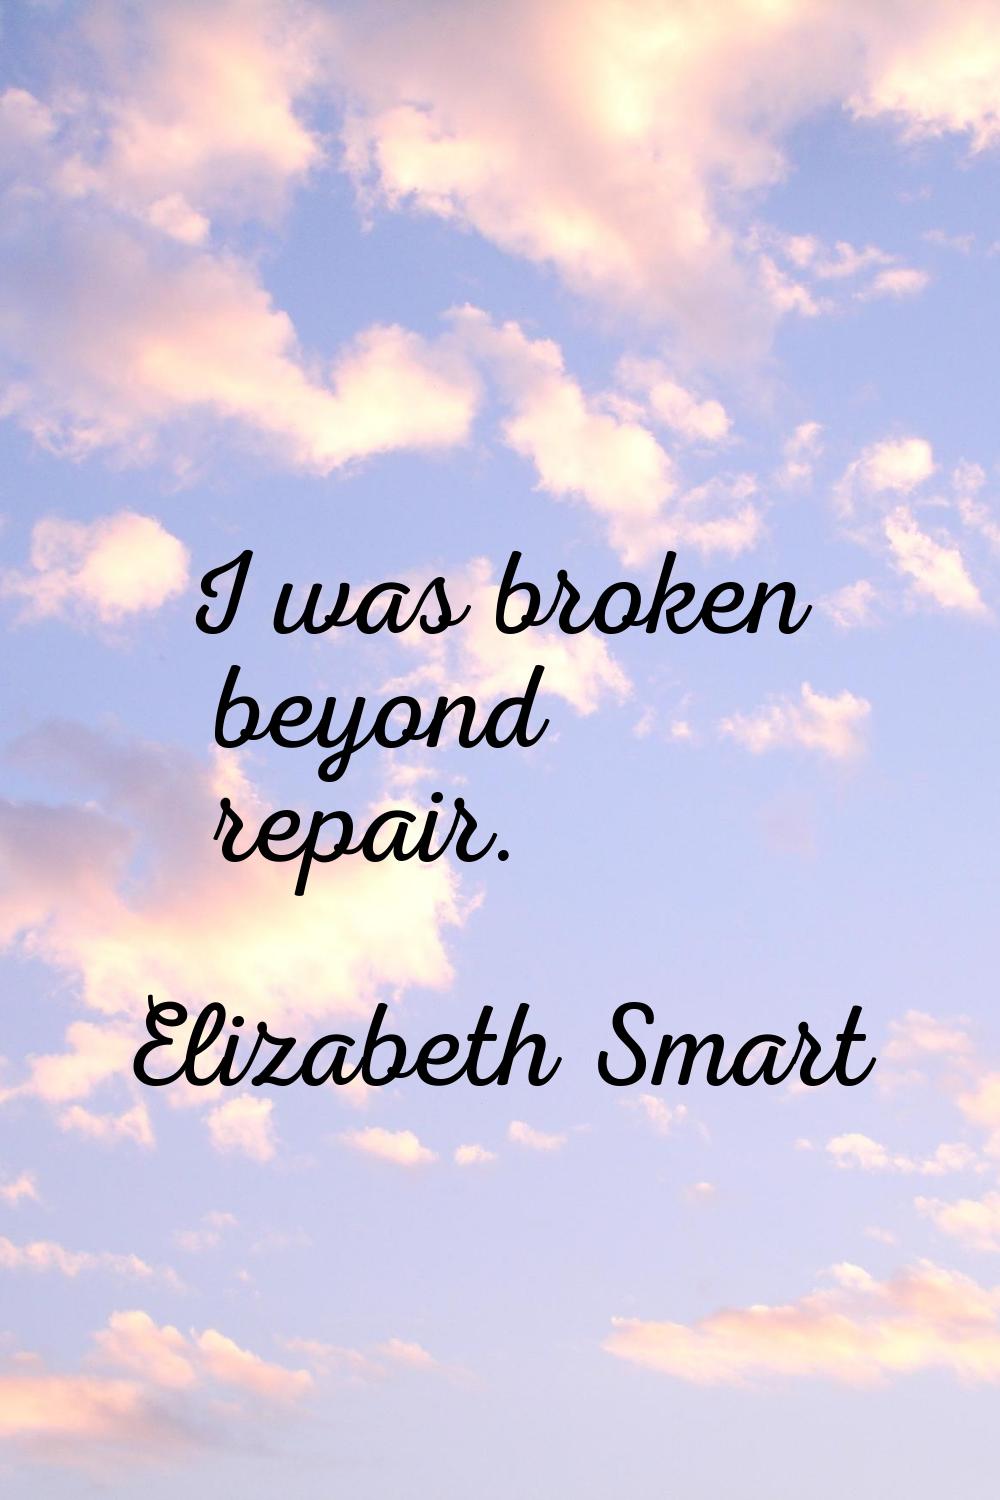 I was broken beyond repair.